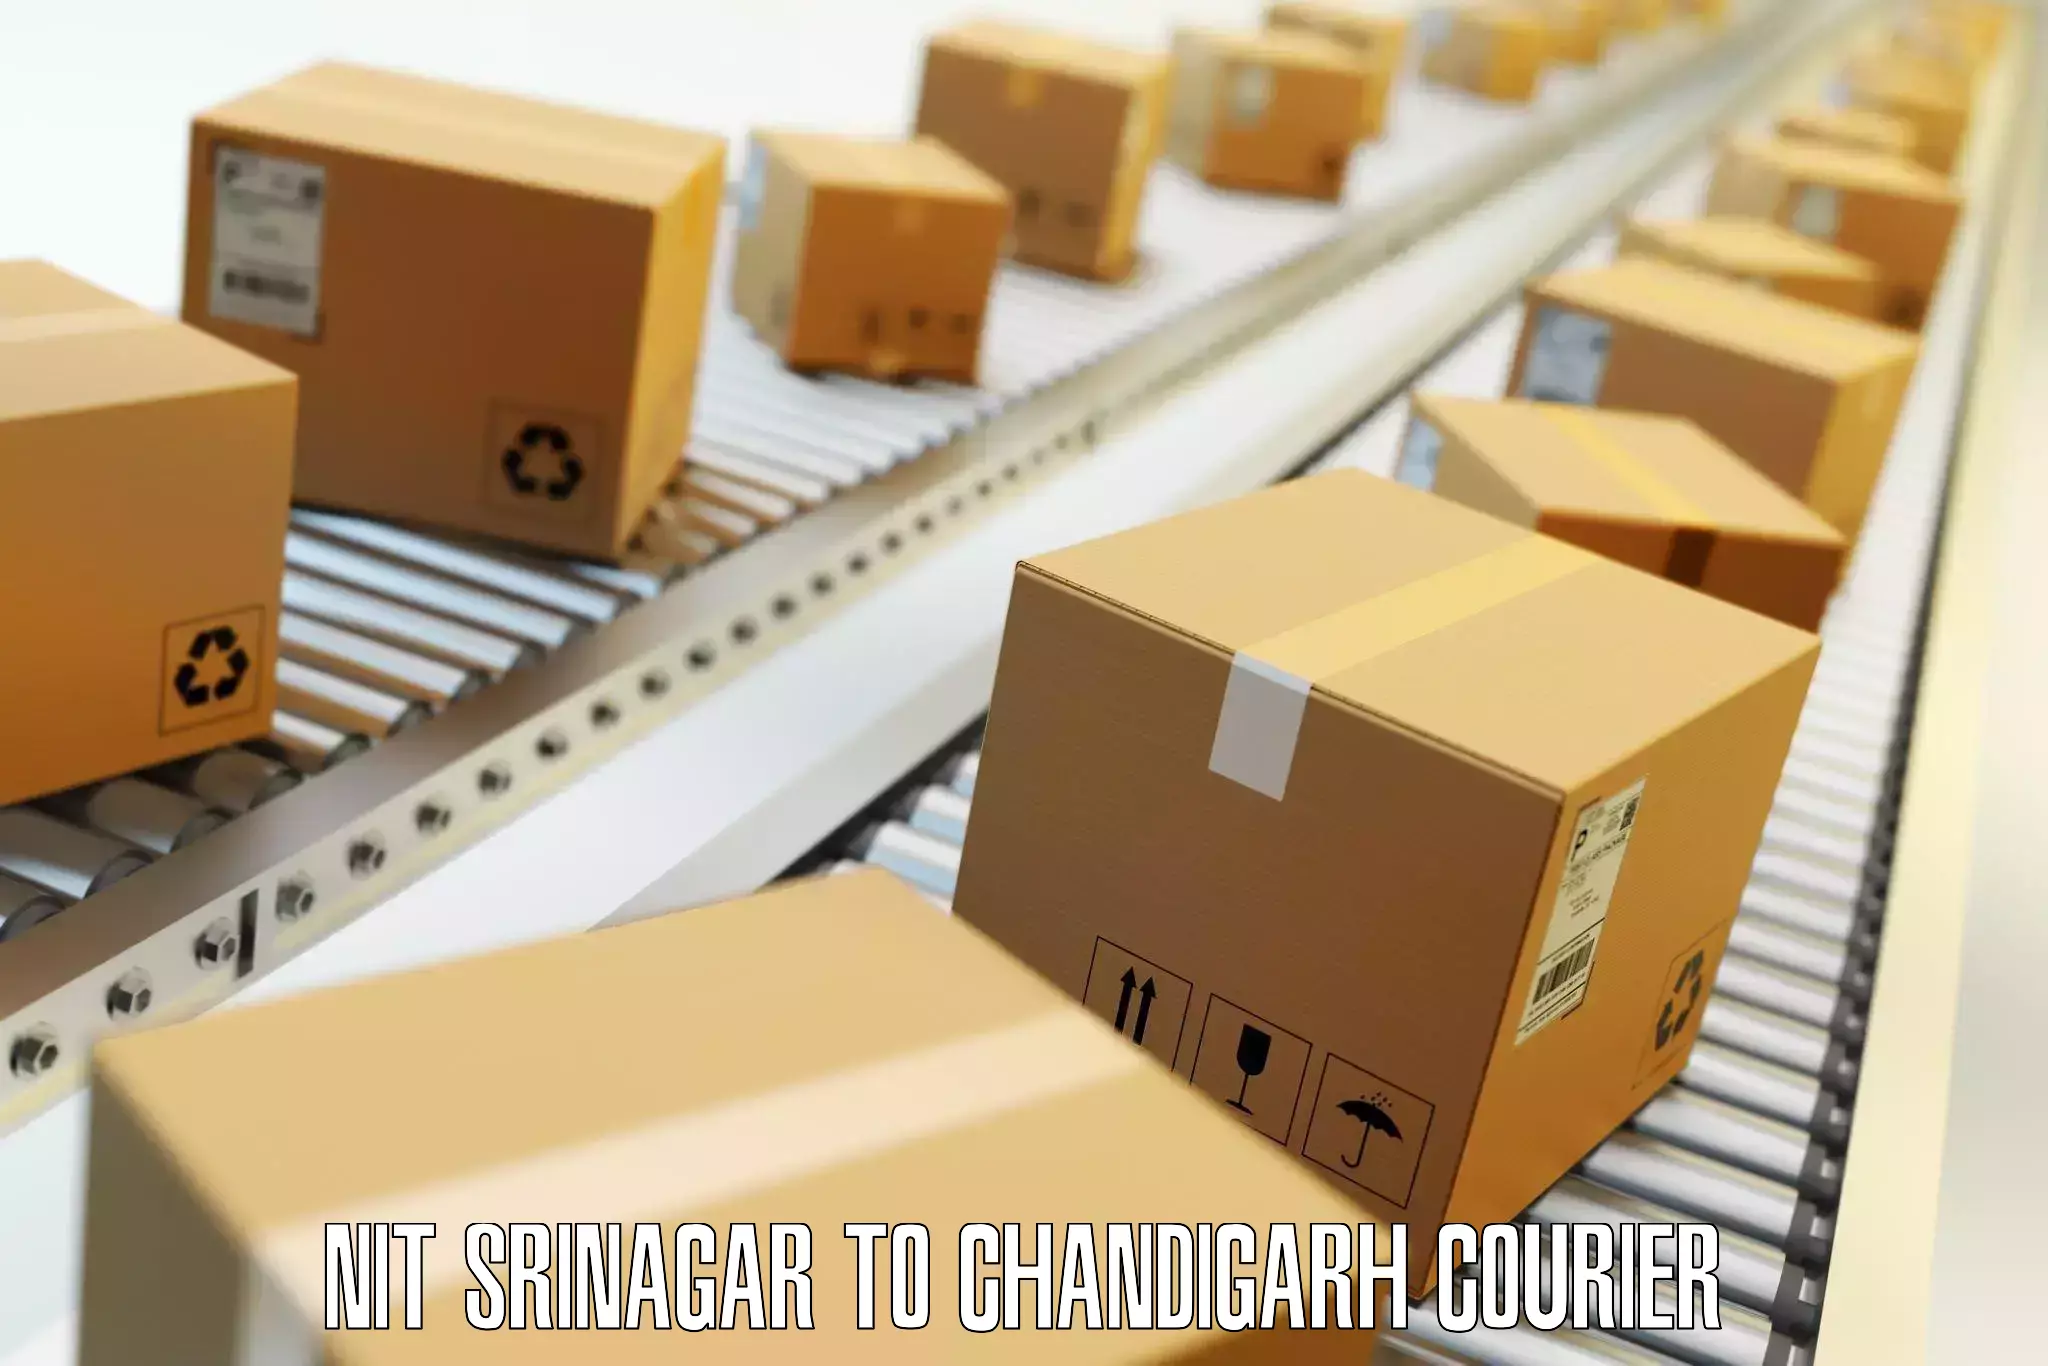 Luggage transport consultancy NIT Srinagar to Chandigarh